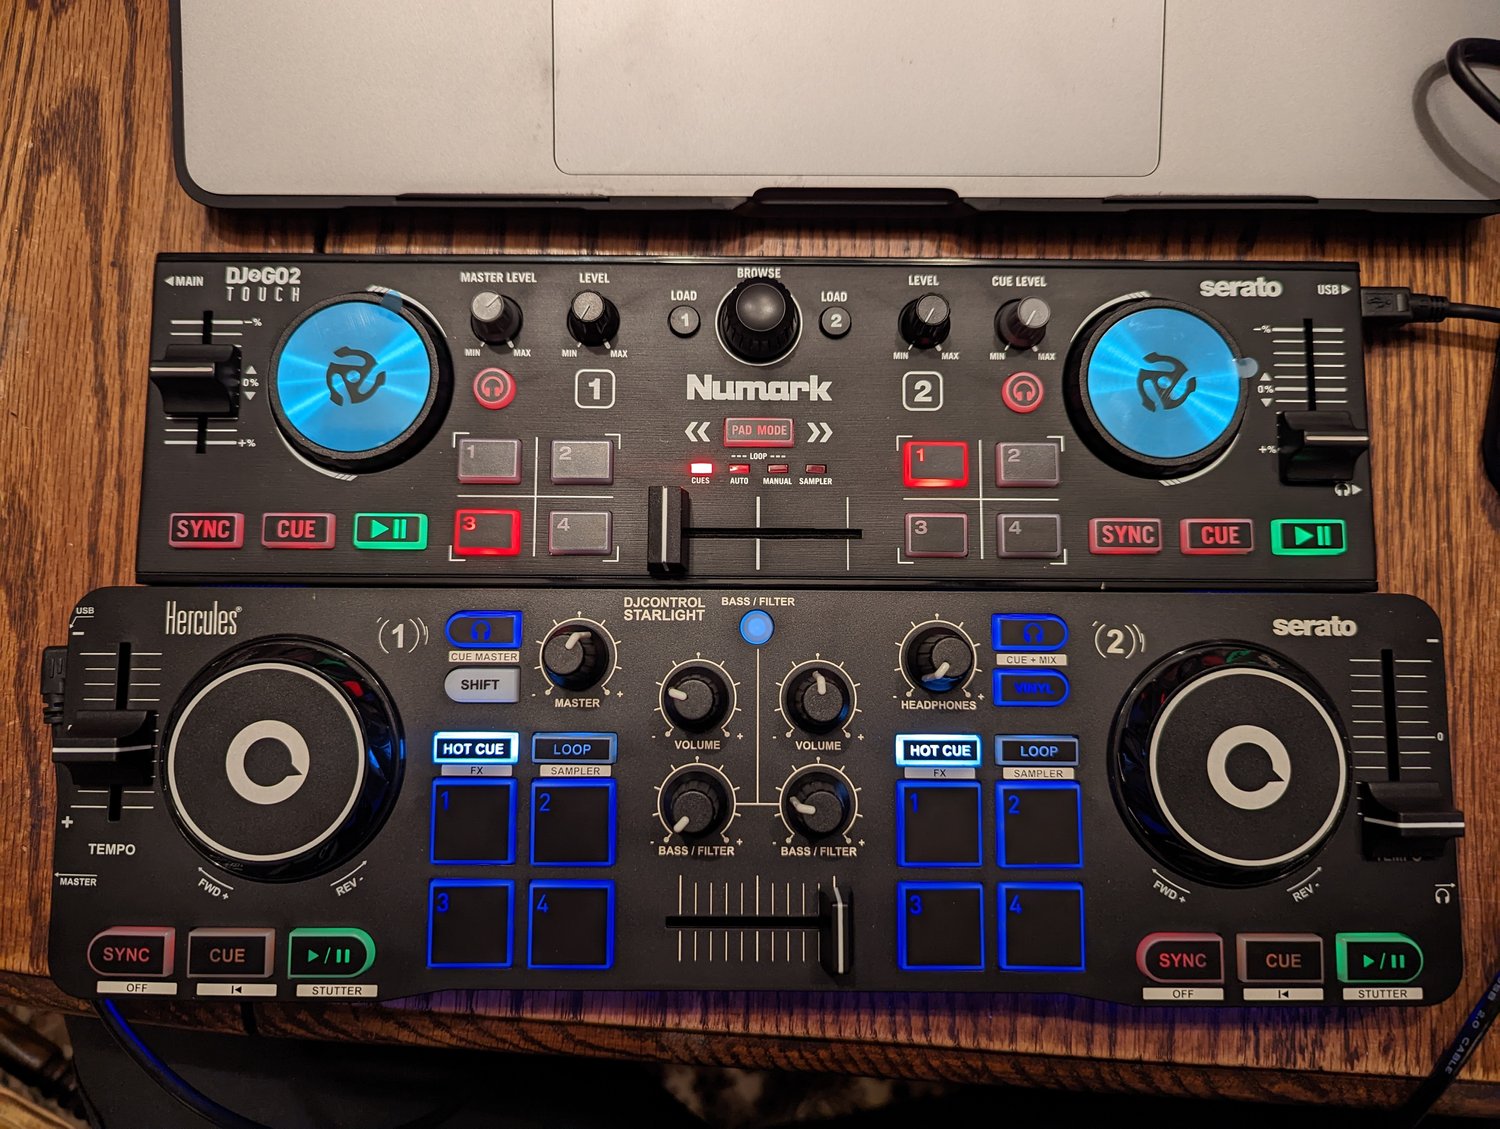 Numark DJ2Go2, Hercules DJ Control Starlight, and DJ Control Mix